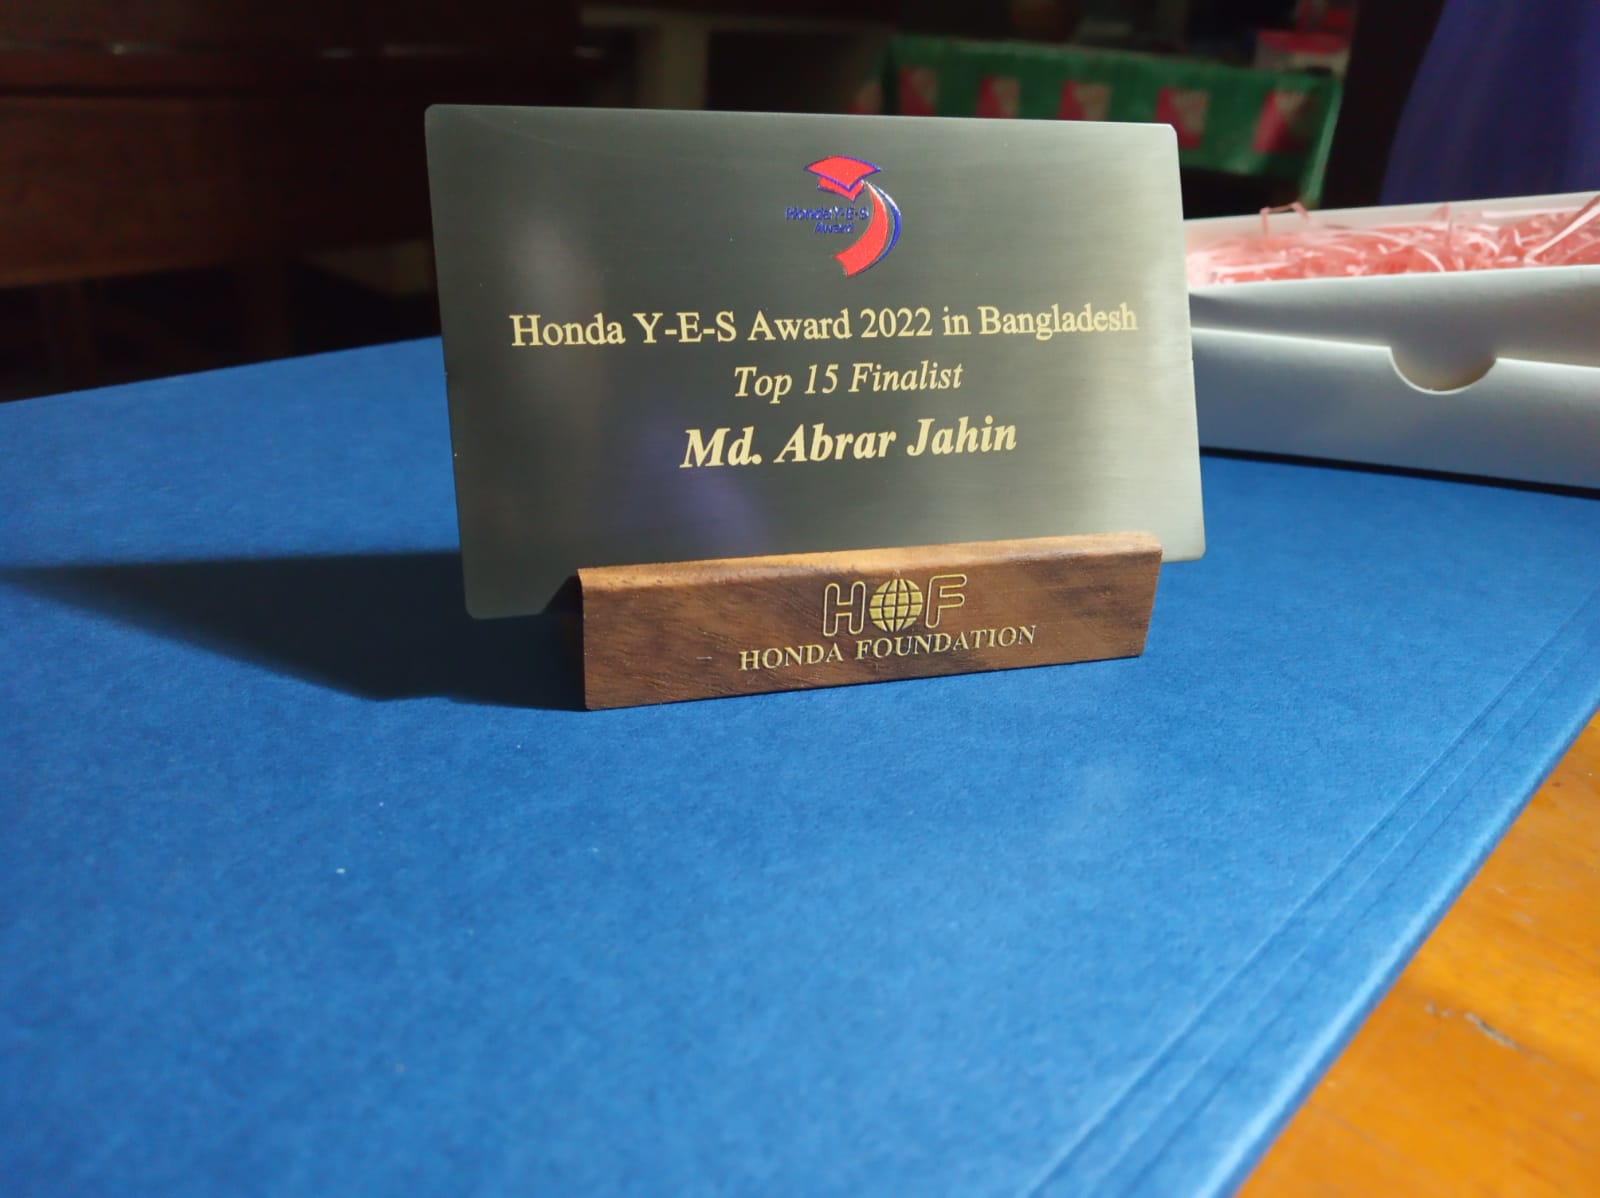 Md Abrar Jahin's HONDA Y-E-S Finalist Award